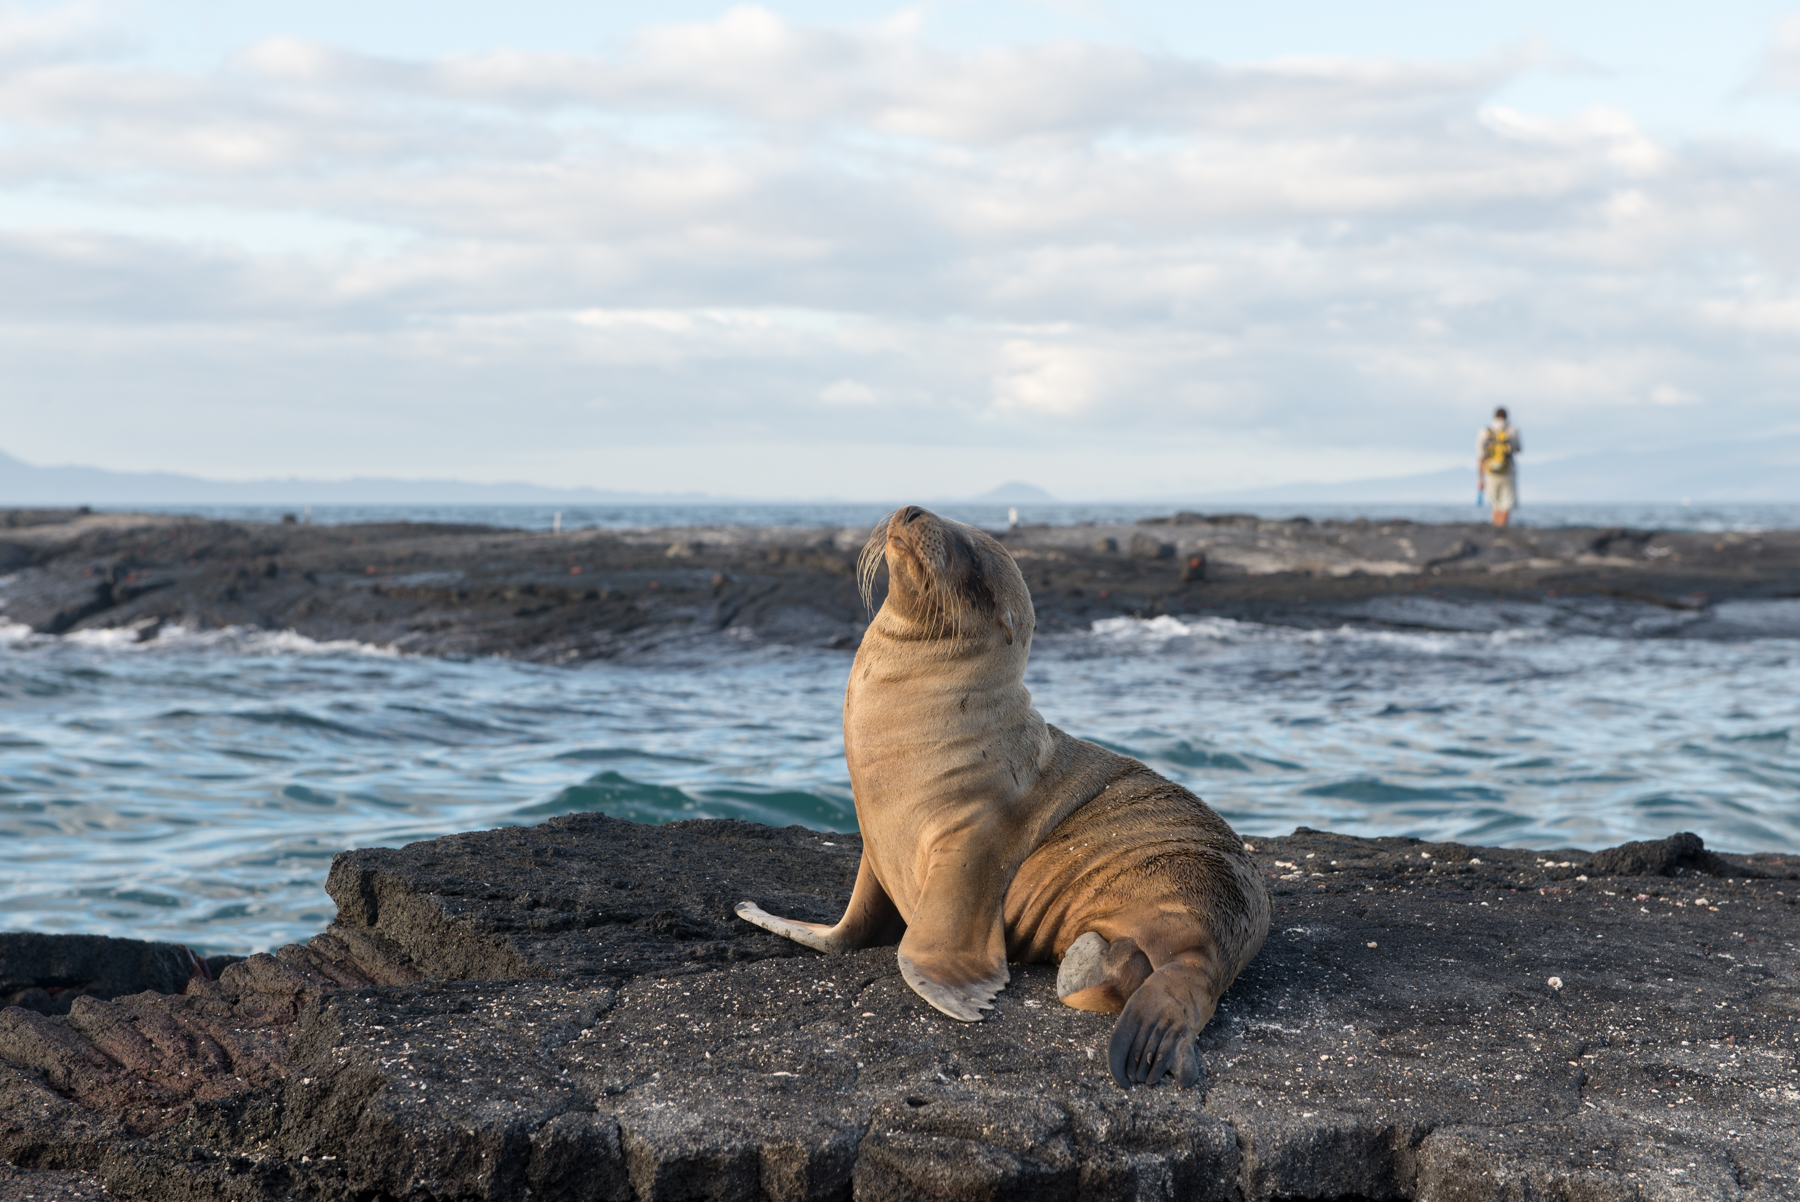 An evolutionary Eden: the Galapagos Islands